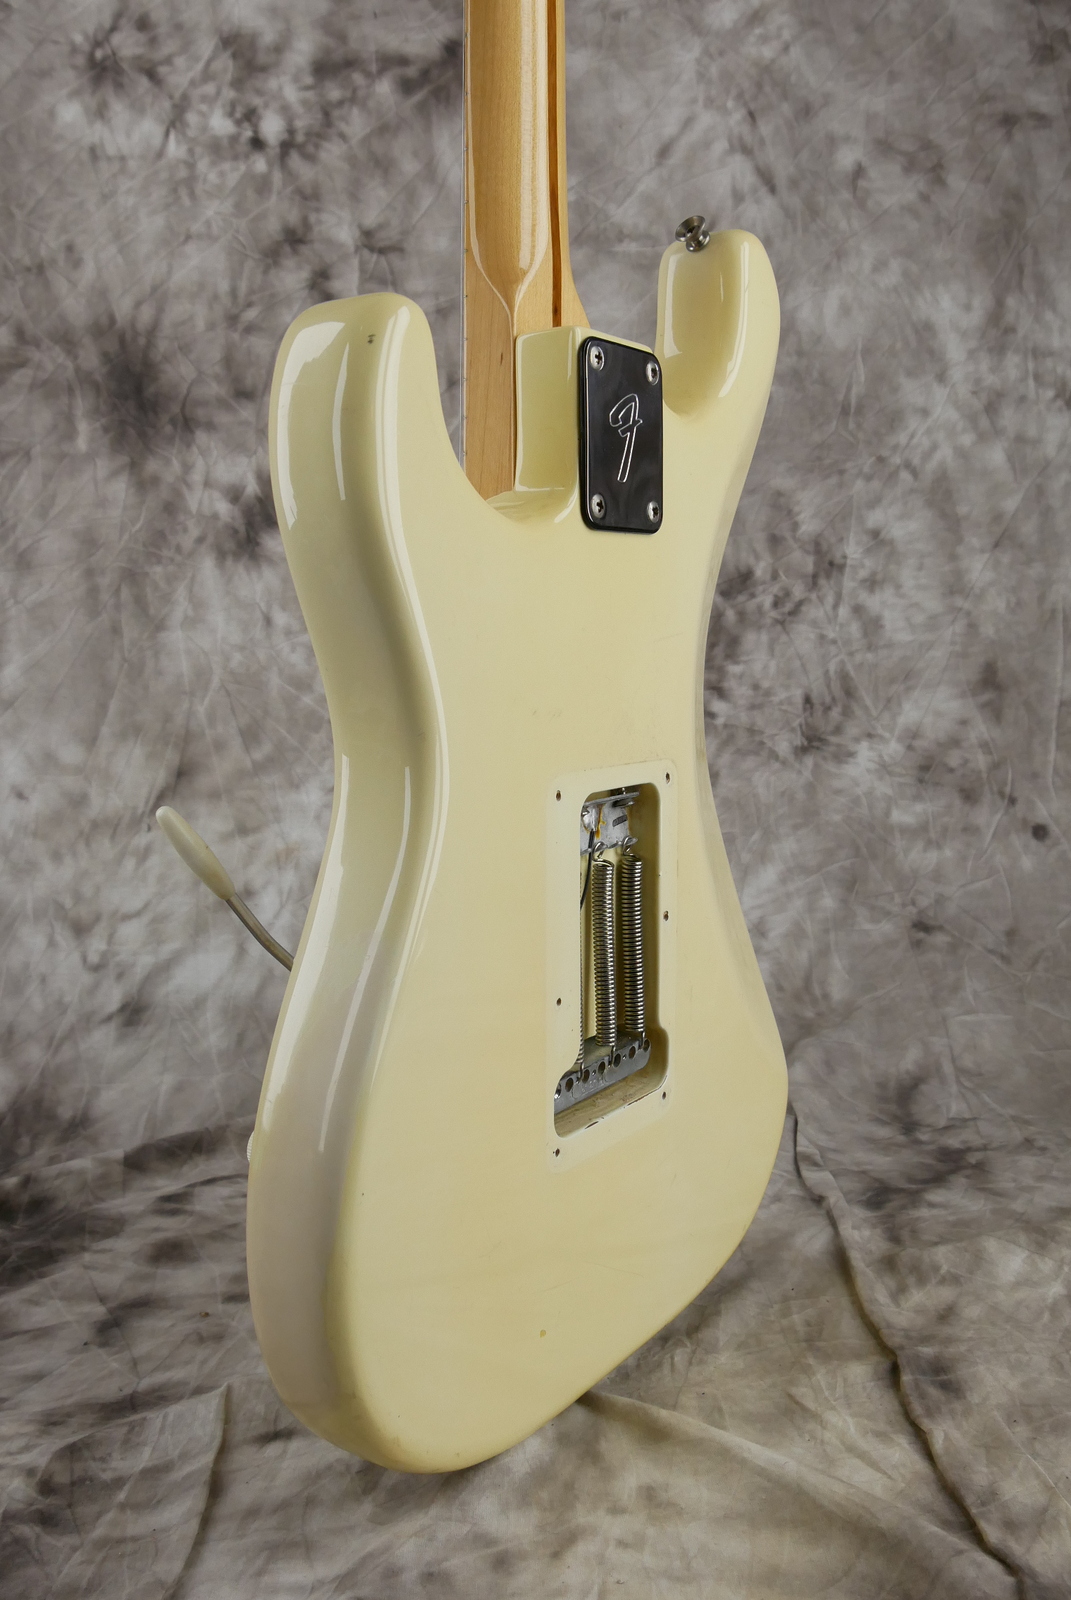 Fender_Stratocaster_Dan_smith_1982_tremolo_hardcase-007.JPG